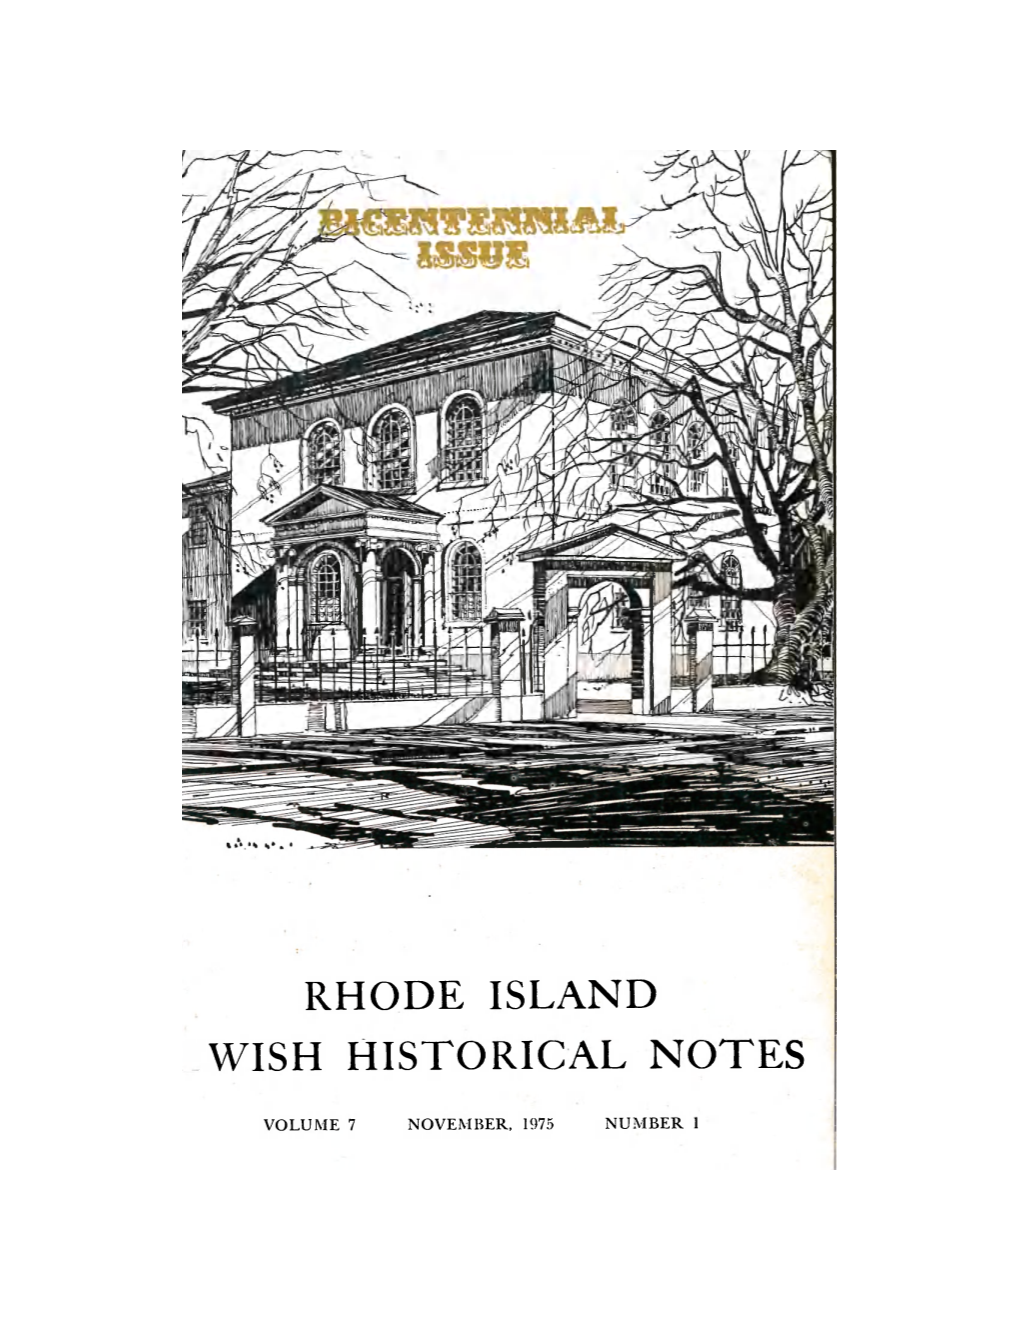 Rhode Island Ewish Historical Notes